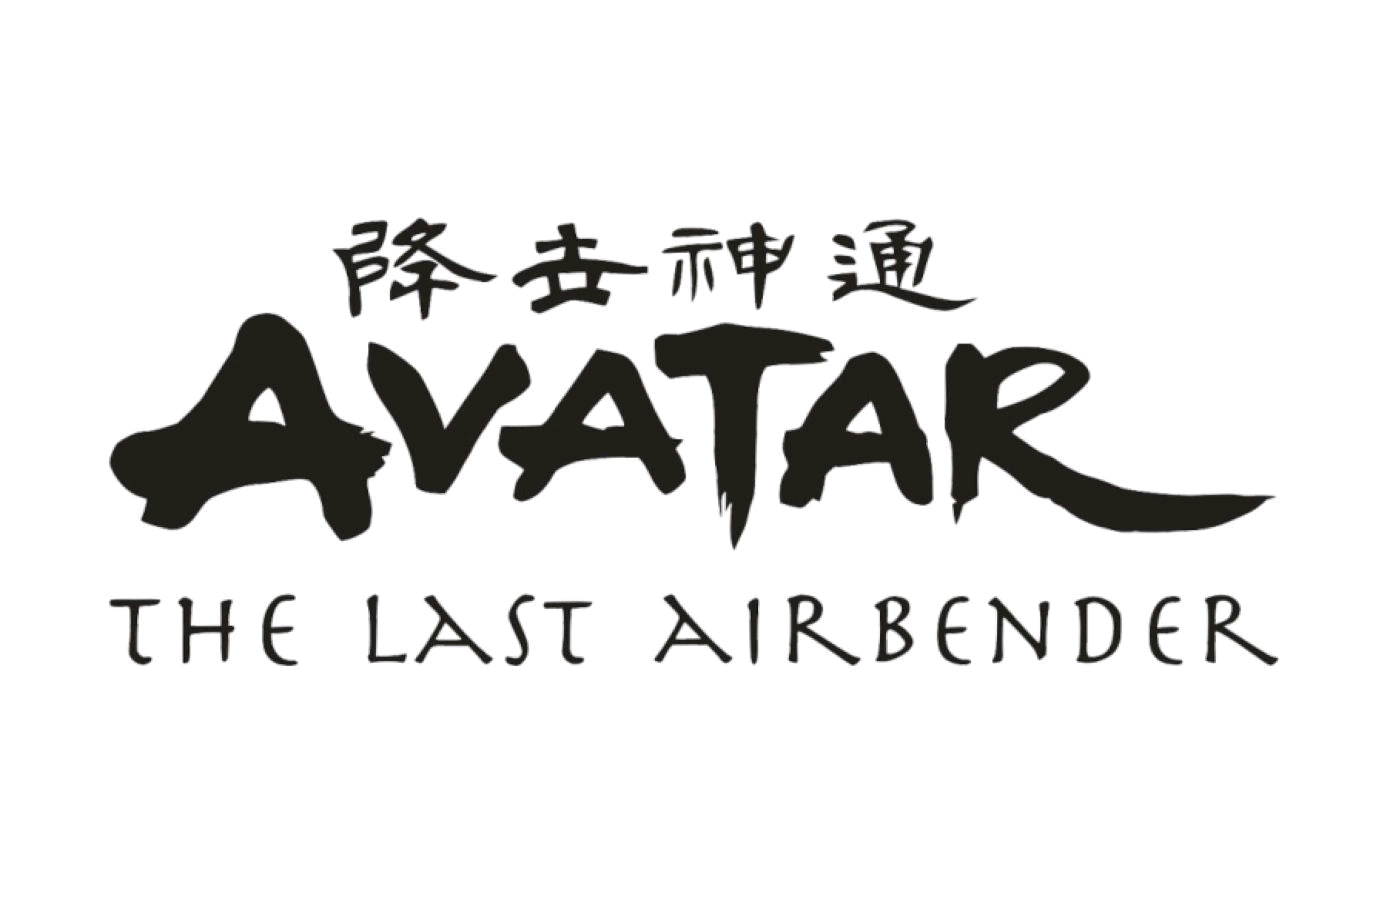 Avatar: The Last Airbender - Fire Lord Ozai Pop! Vinyl